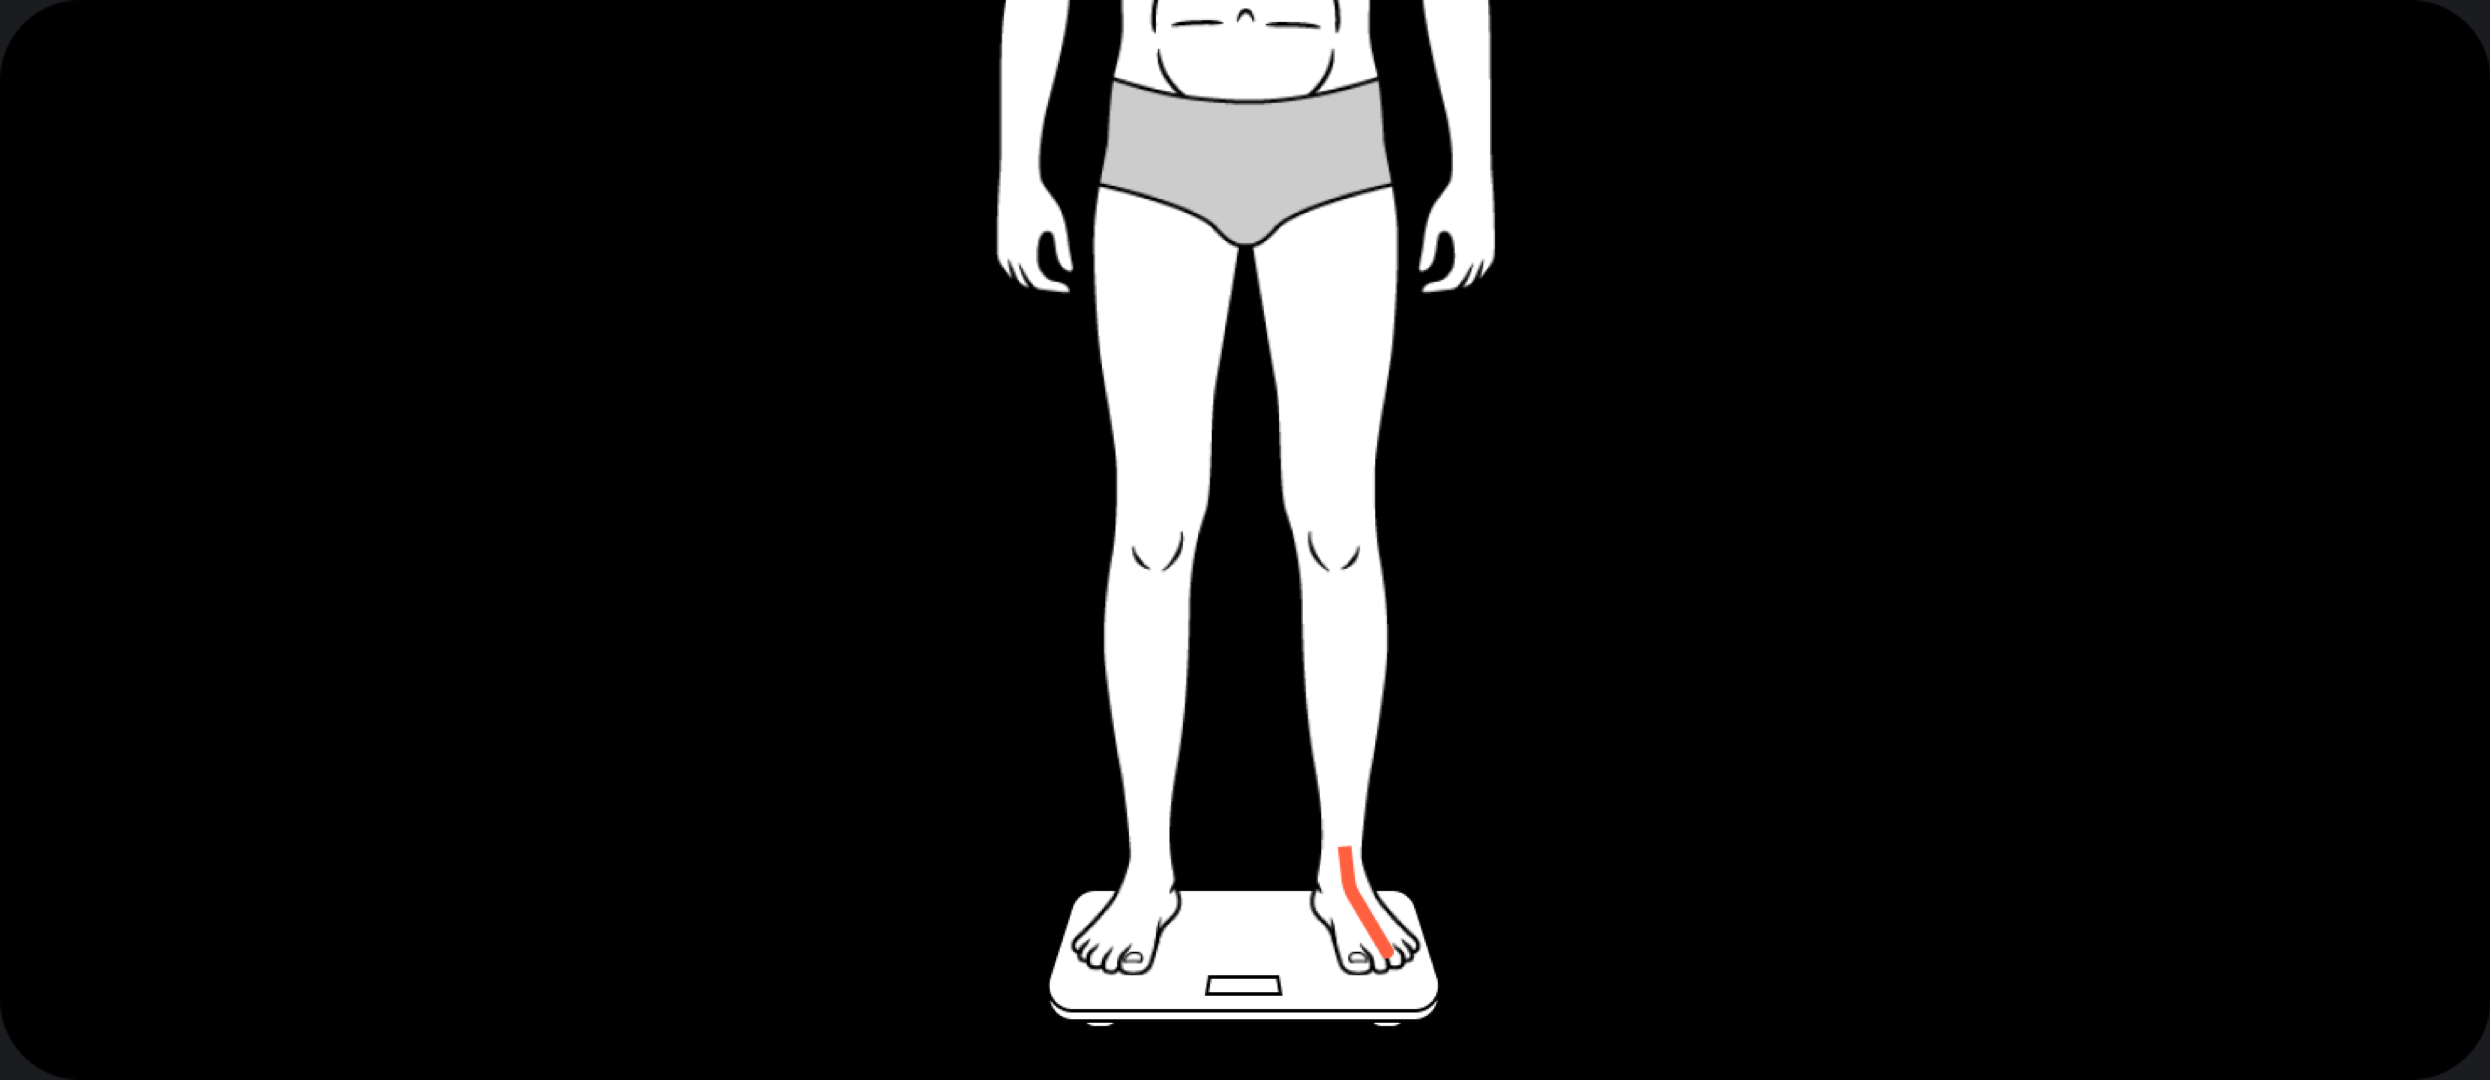 aurawellness full body analysis digital scale